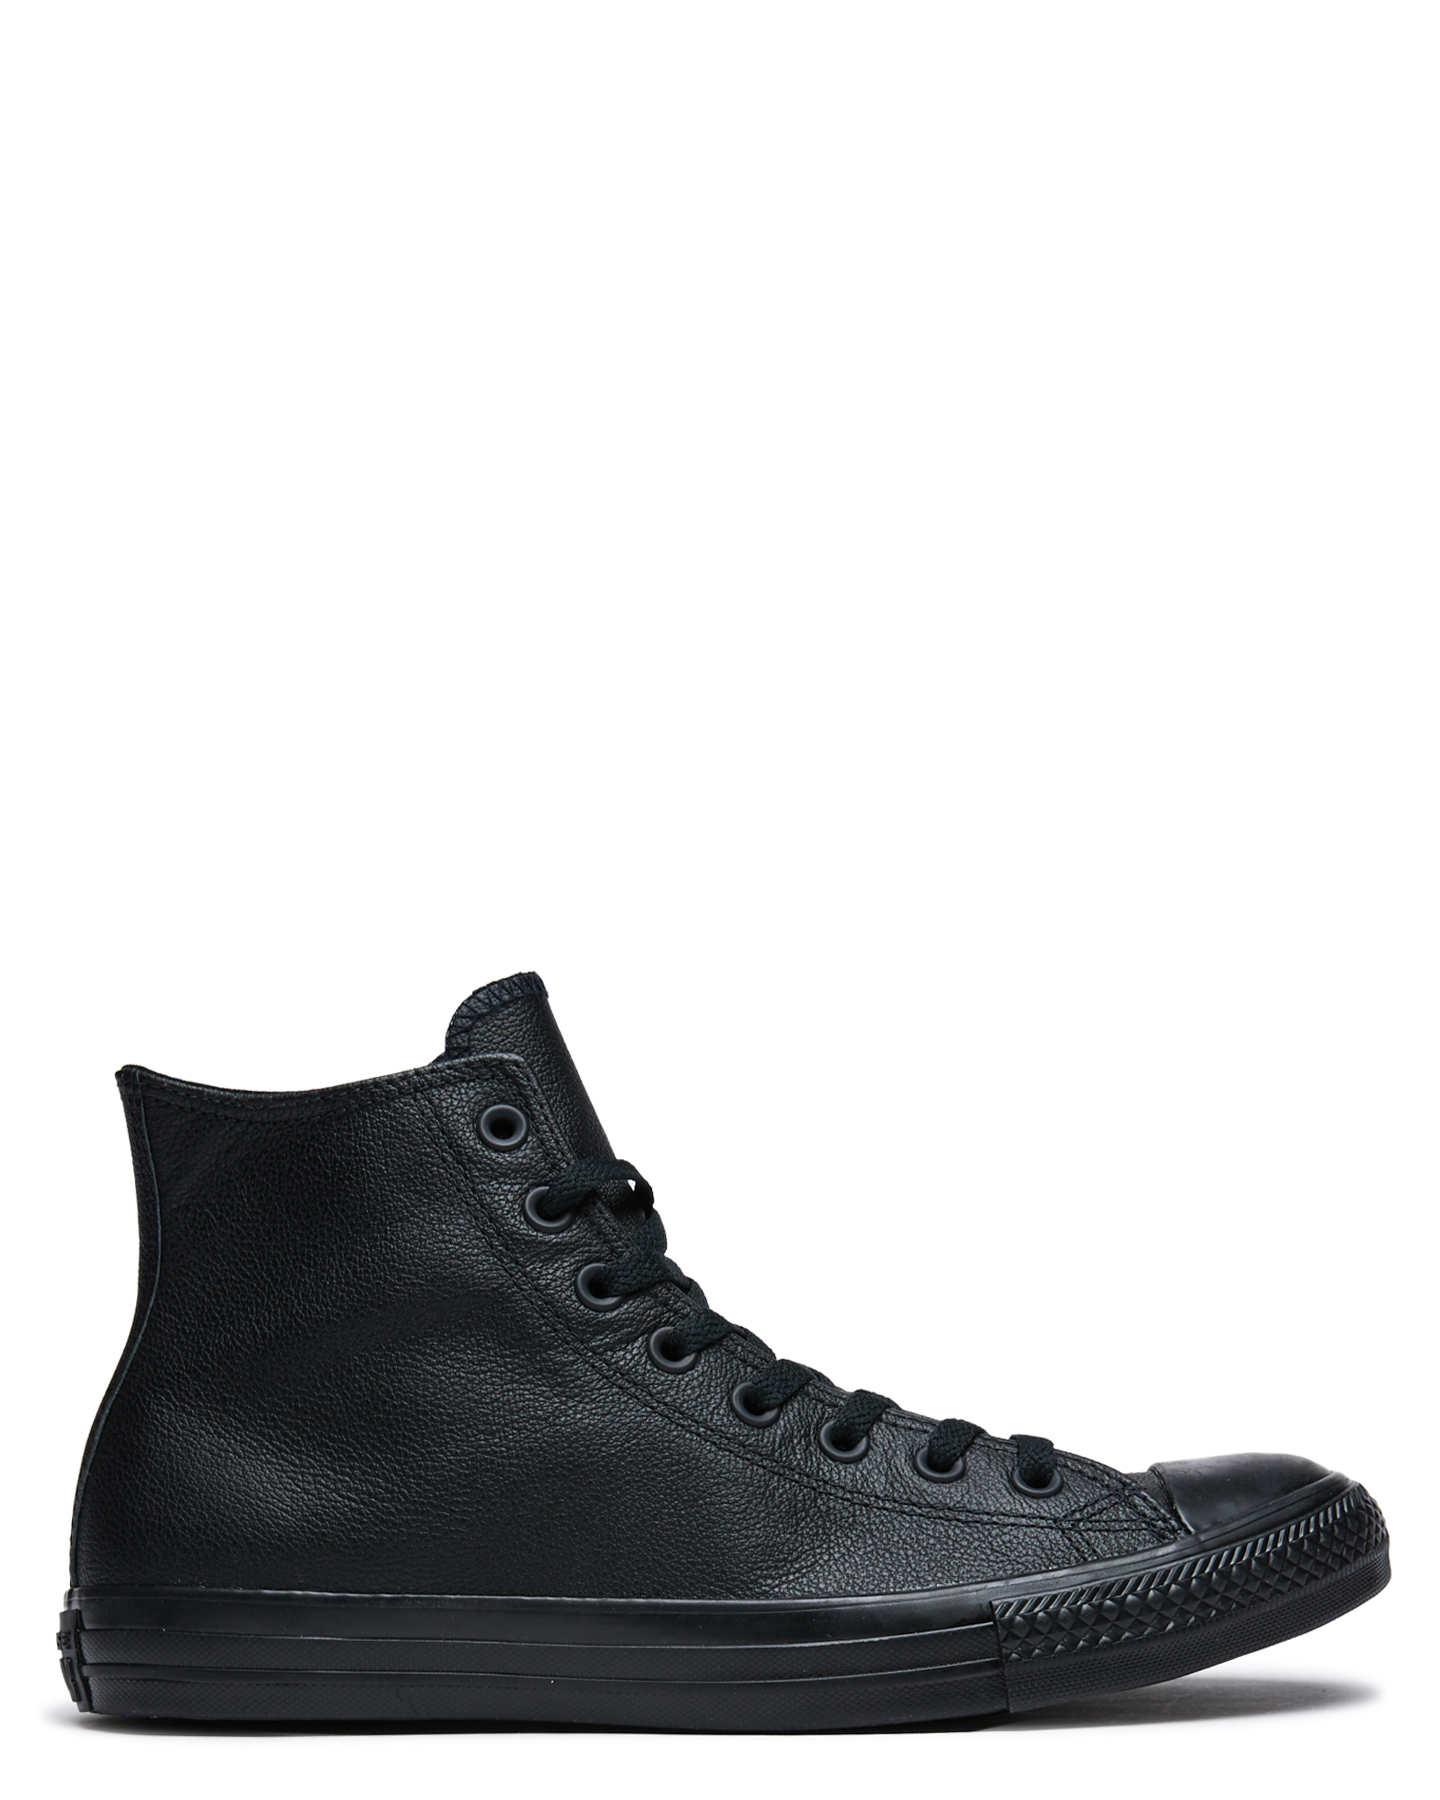 Converse Mens Chuck Taylor All Star Hi Top Leather Shoe - Black ...